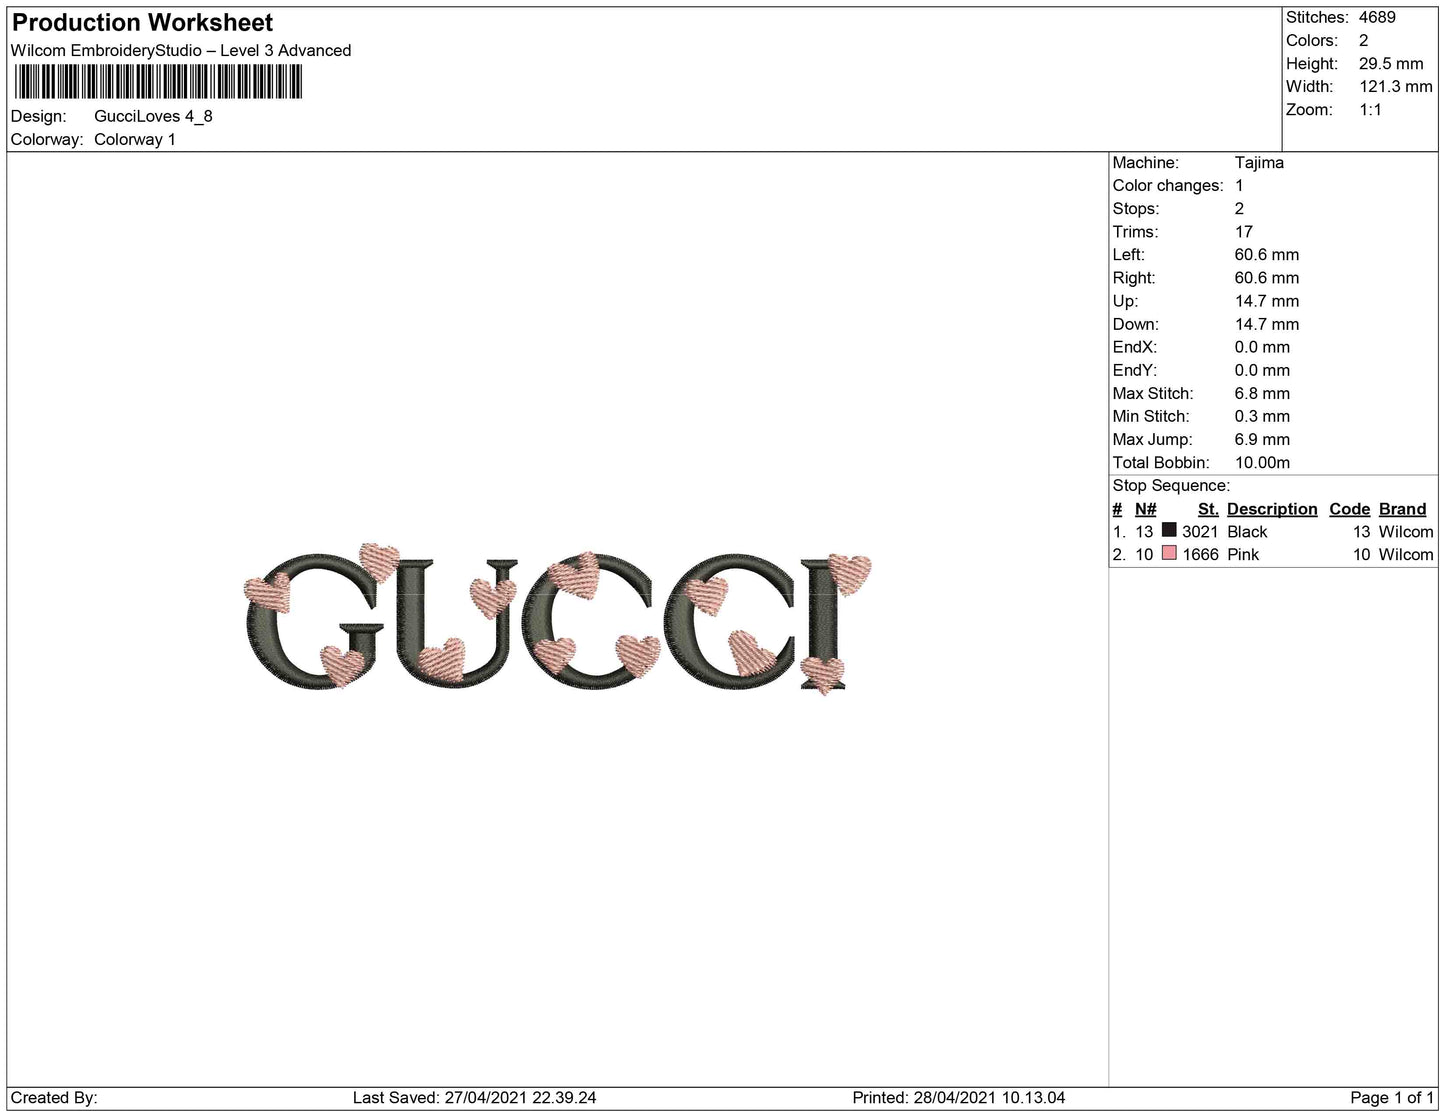 Gucci Loves